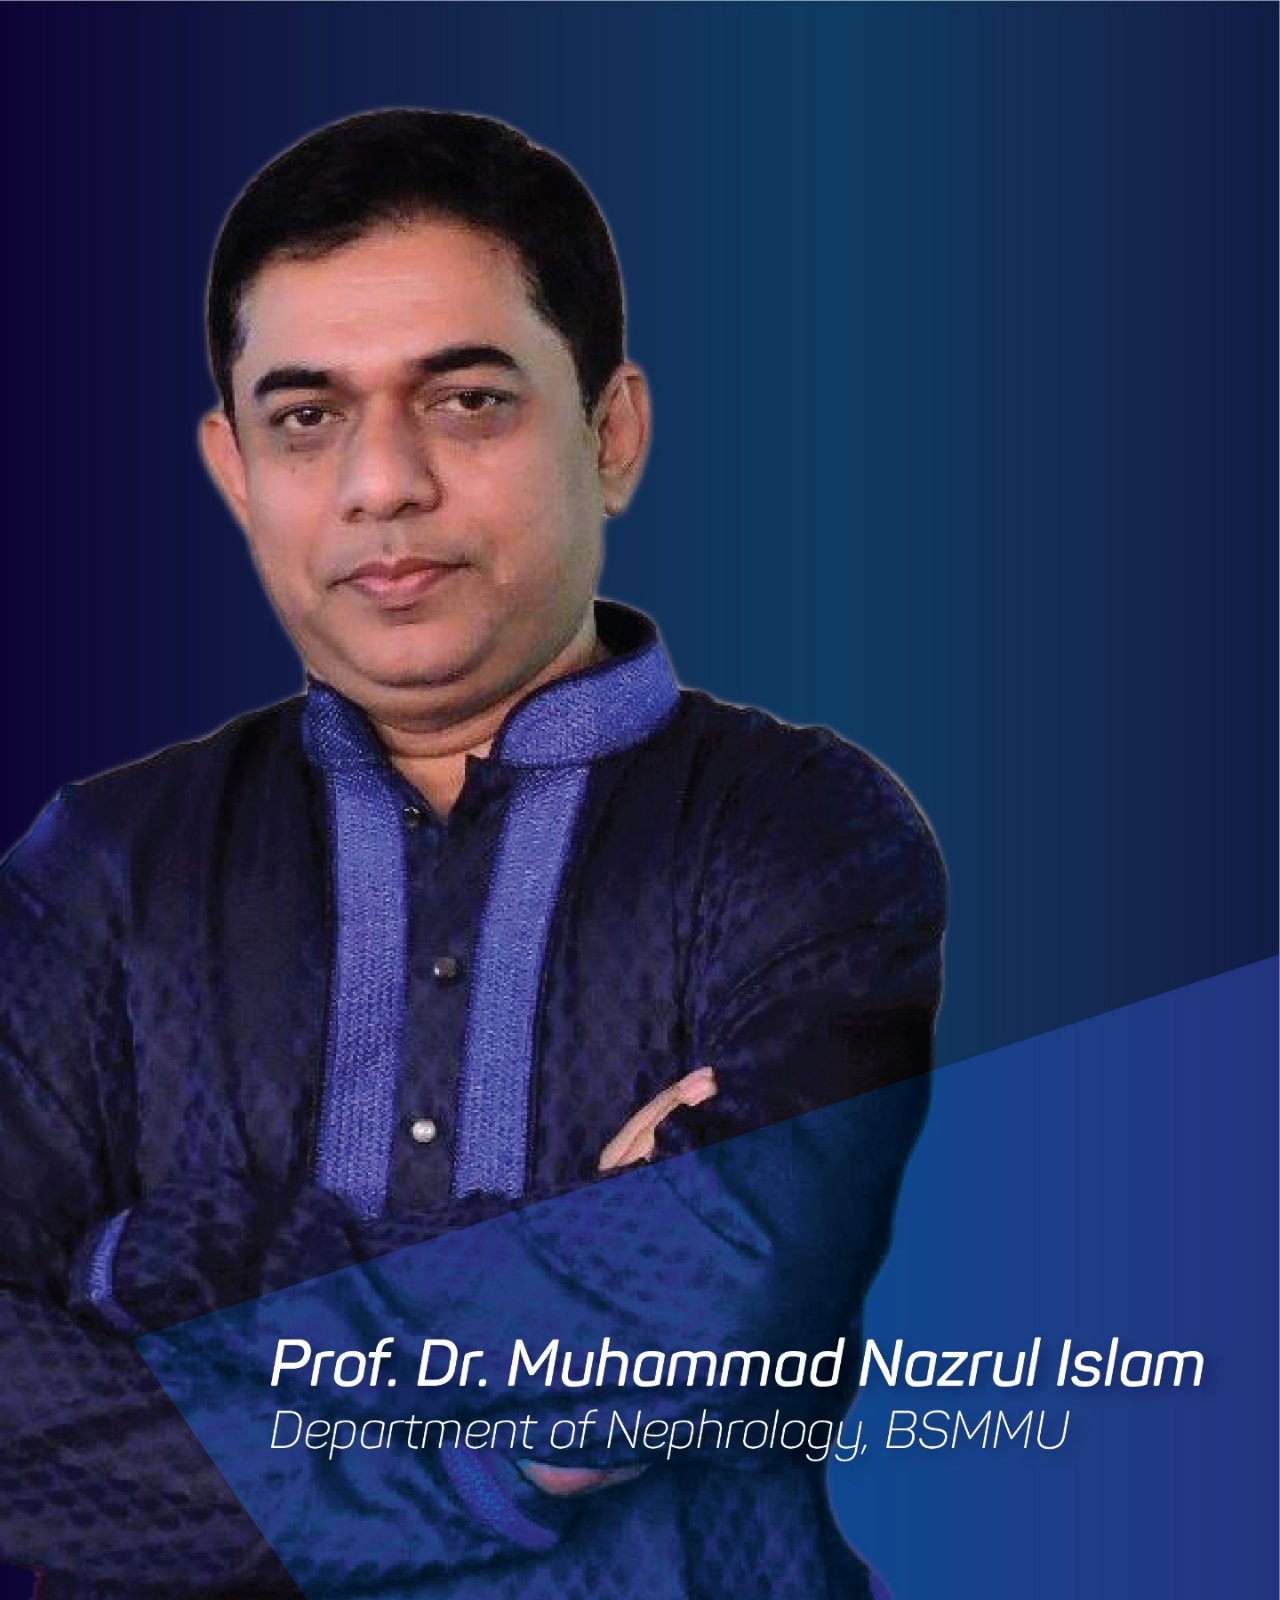 Prof. Dr. Muhammad Nazrul Islam